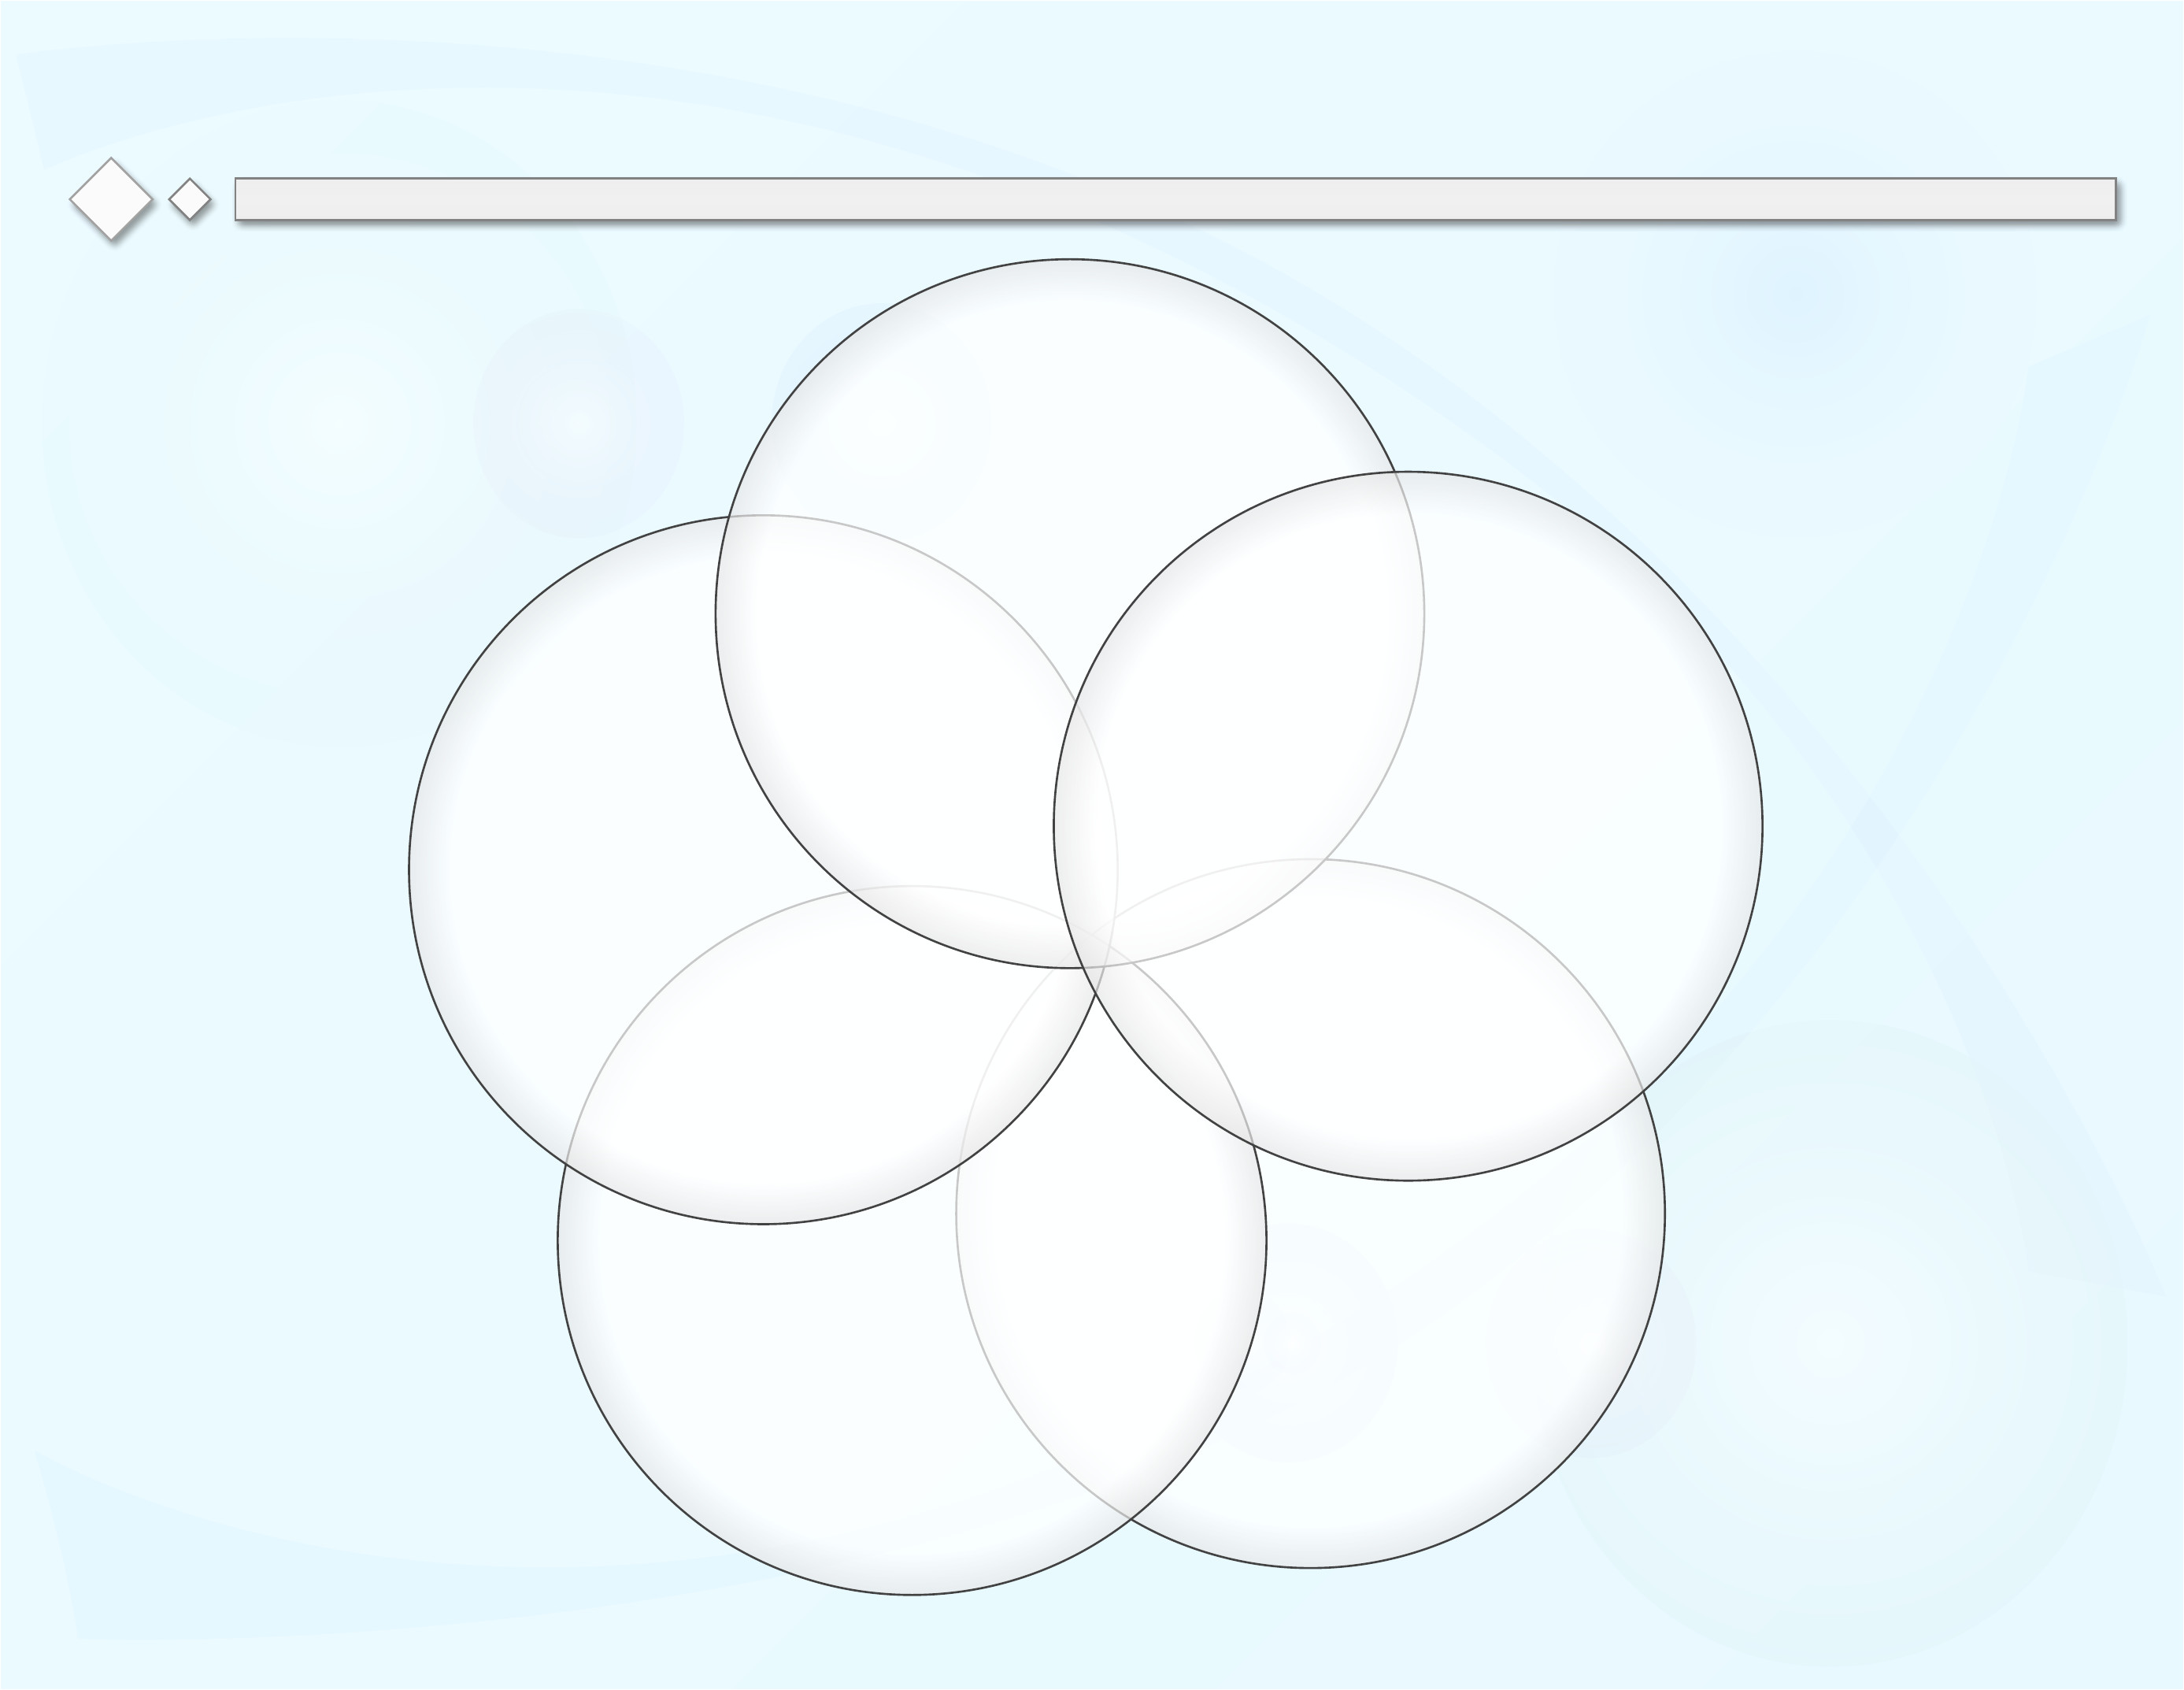 Venn Diagram 5 Circles Template 6 Circles Venn Diagram Template Free Download